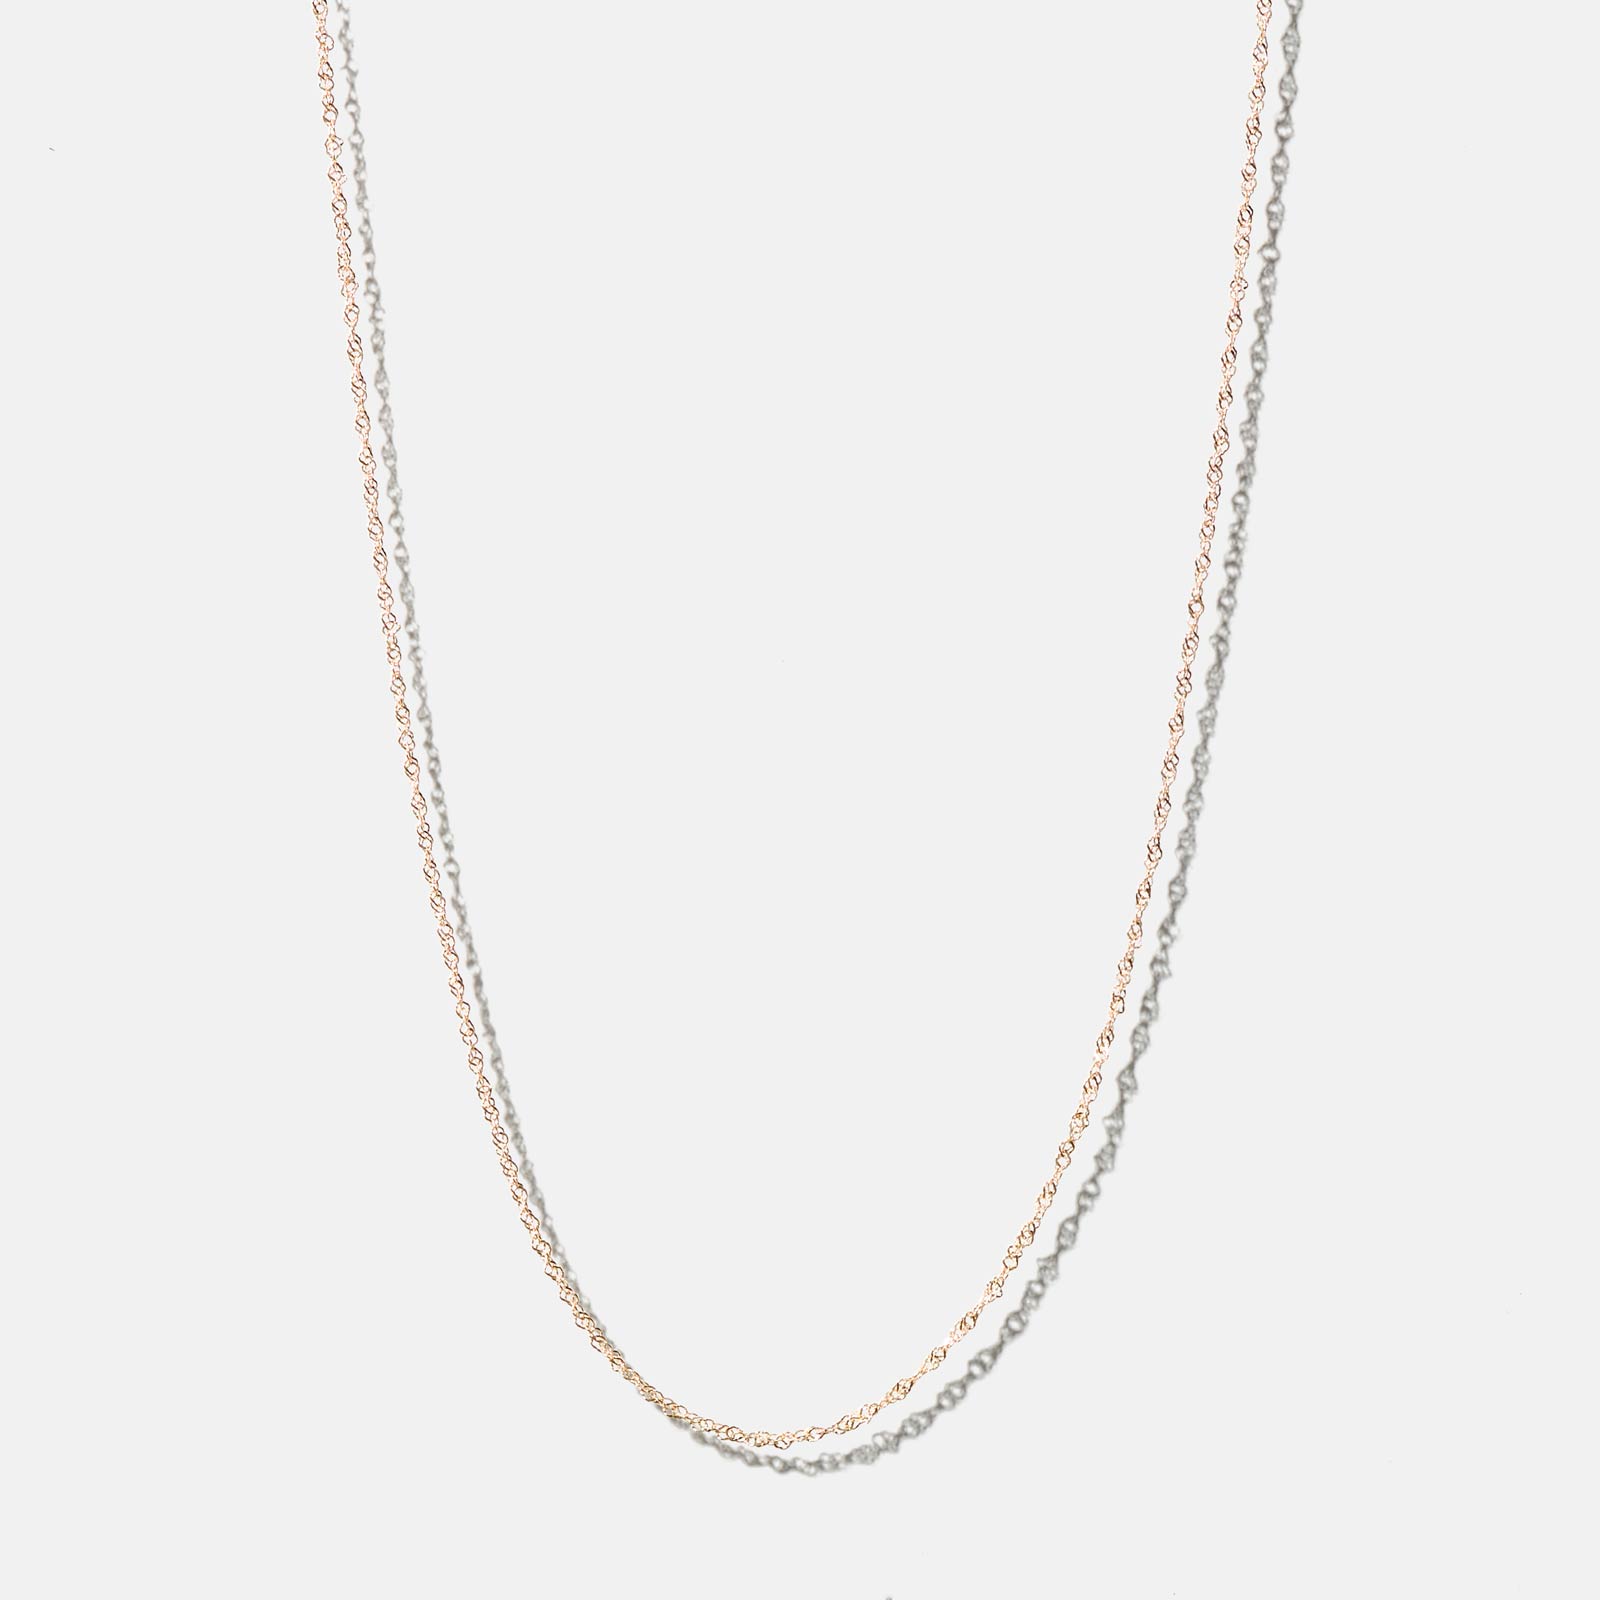 Halsband 18k guld - Singaporekedja 38+4 cm